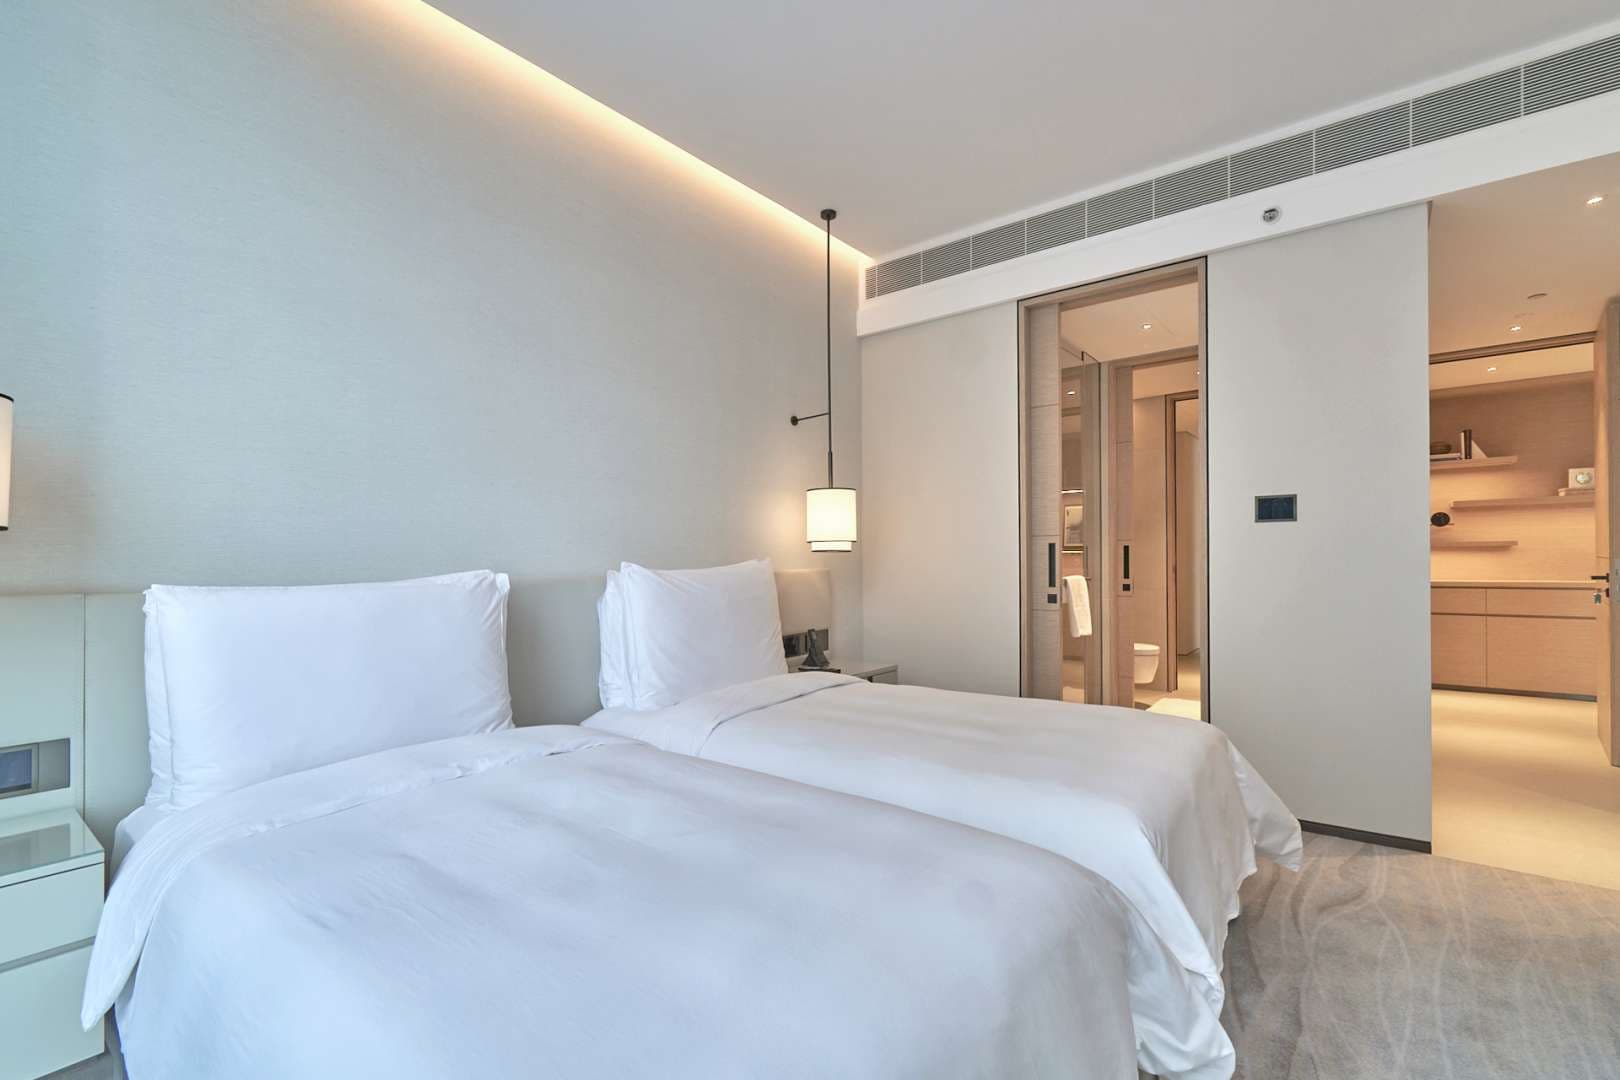 3 Bedroom Apartment For Rent The Address Jumeirah Resort And Spa Lp08896 1e96c8ba11f3b800.jpg